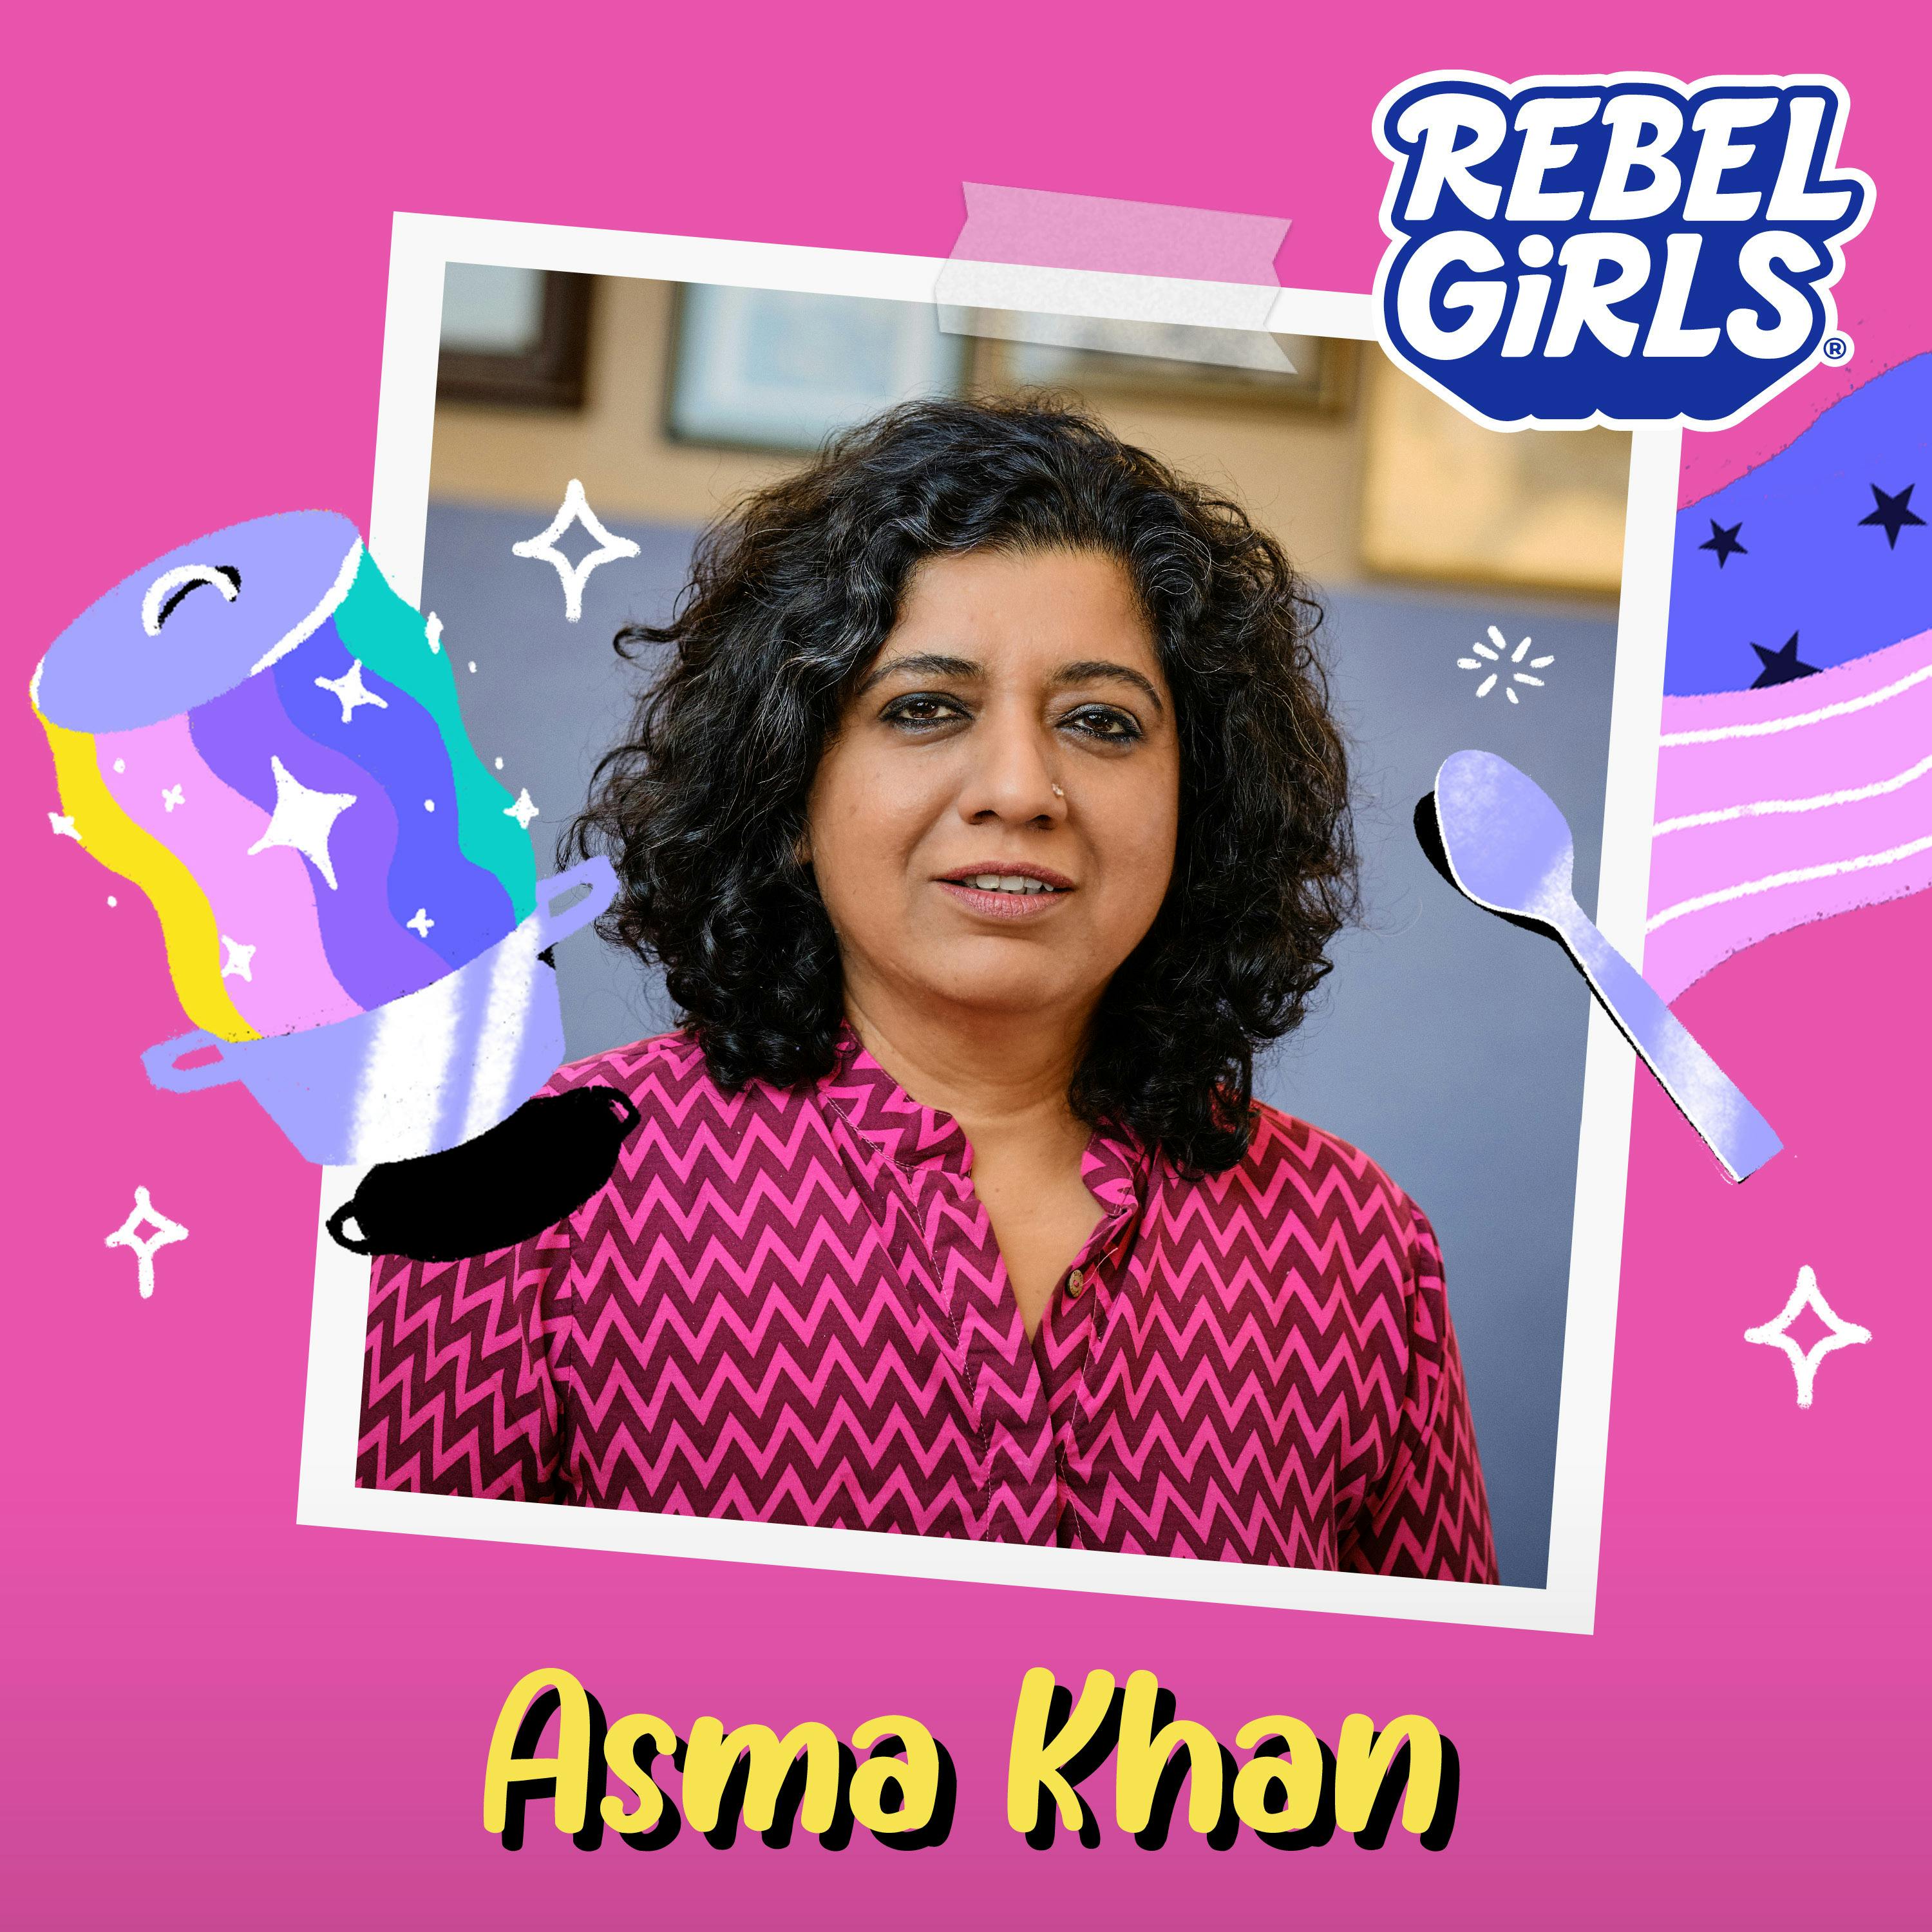 Get to Know Asma Khan